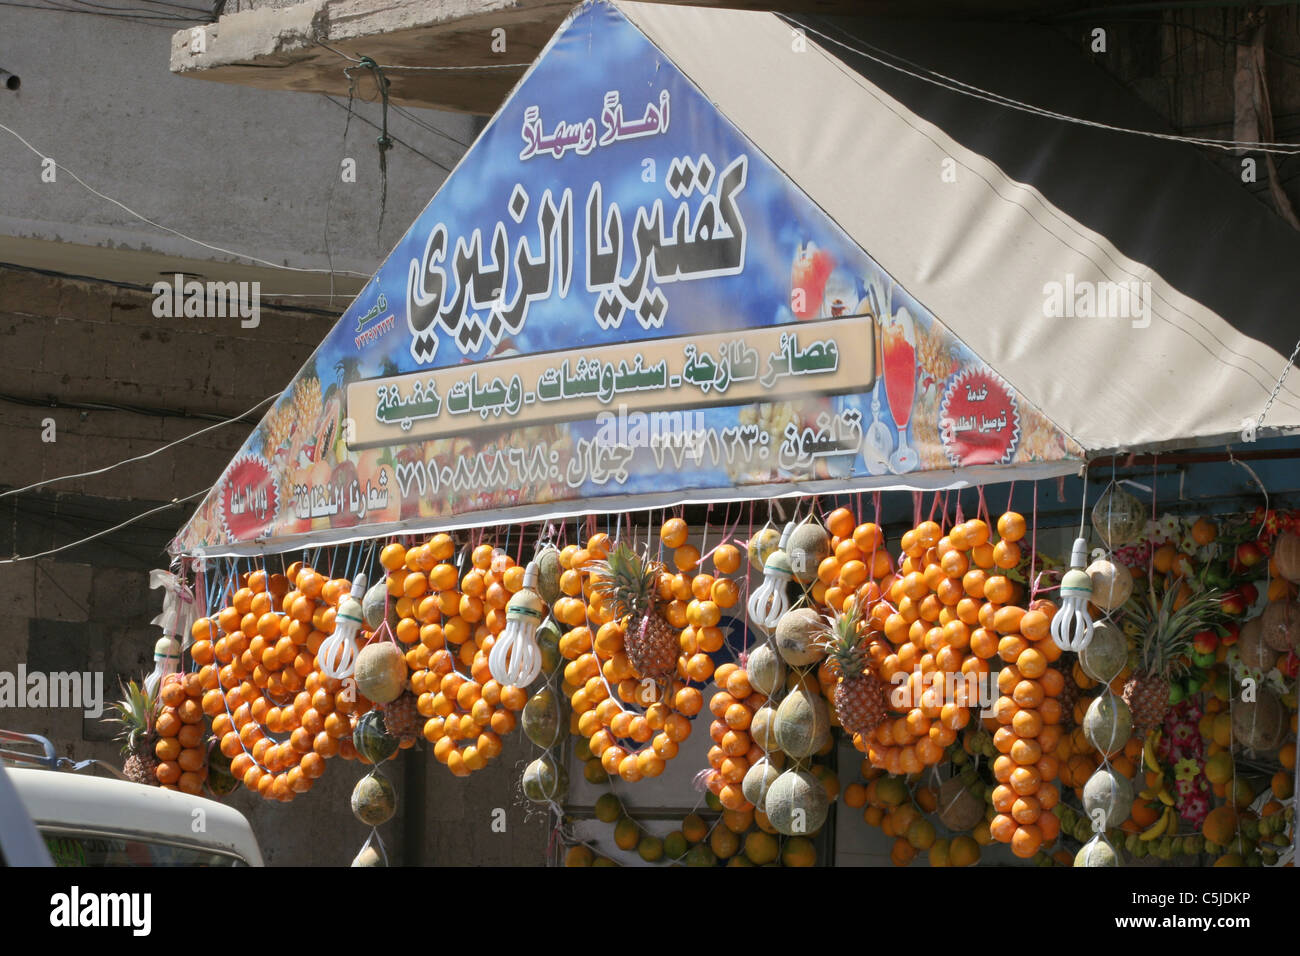 Yemen fruit store with hanging displays Stock Photo